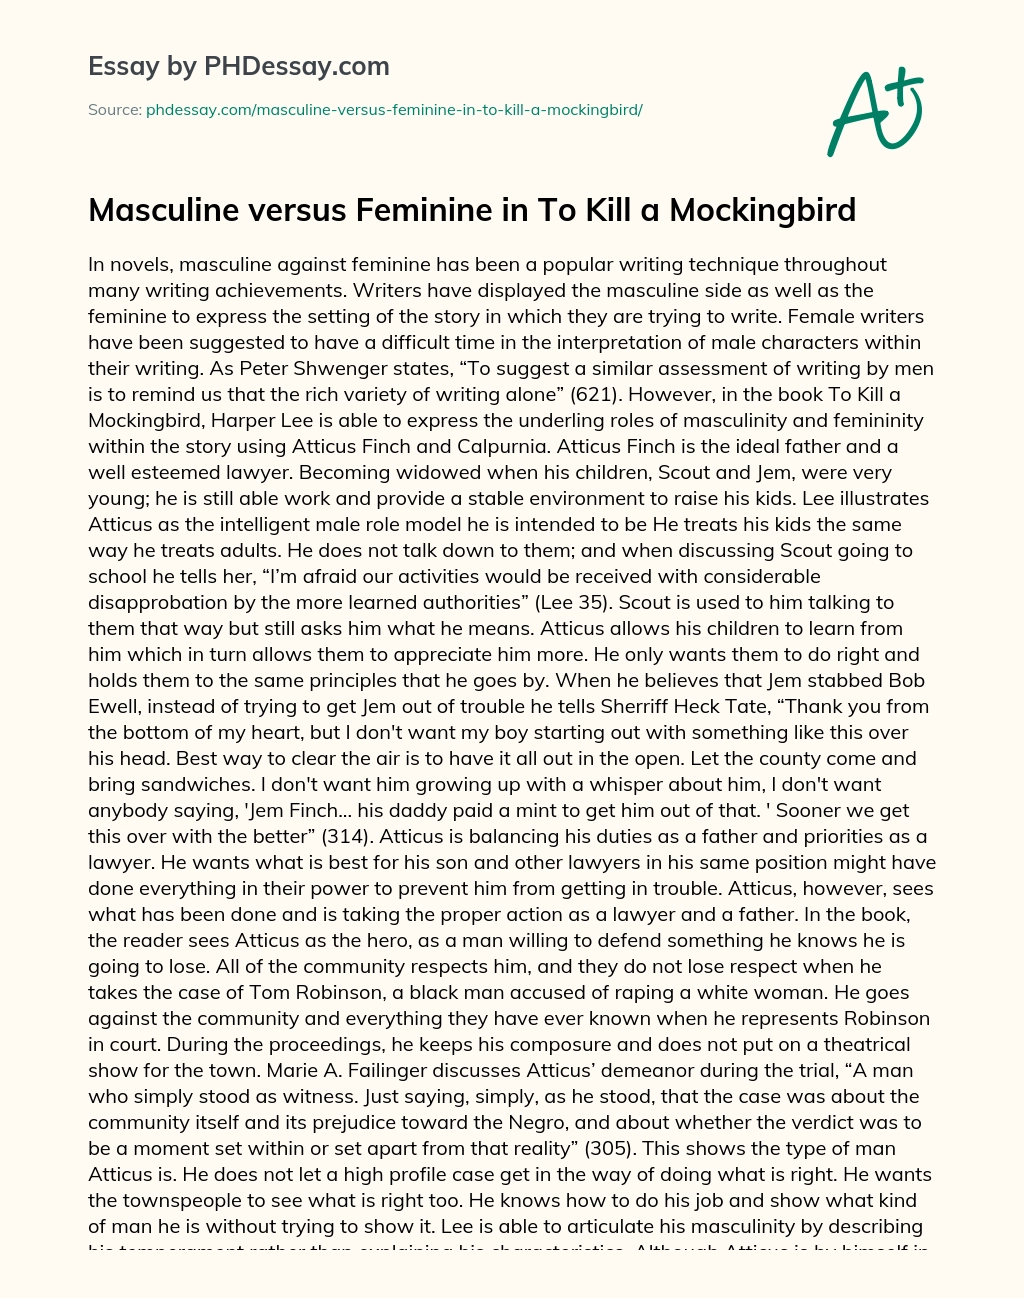 Masculine versus Feminine in To Kill a Mockingbird essay